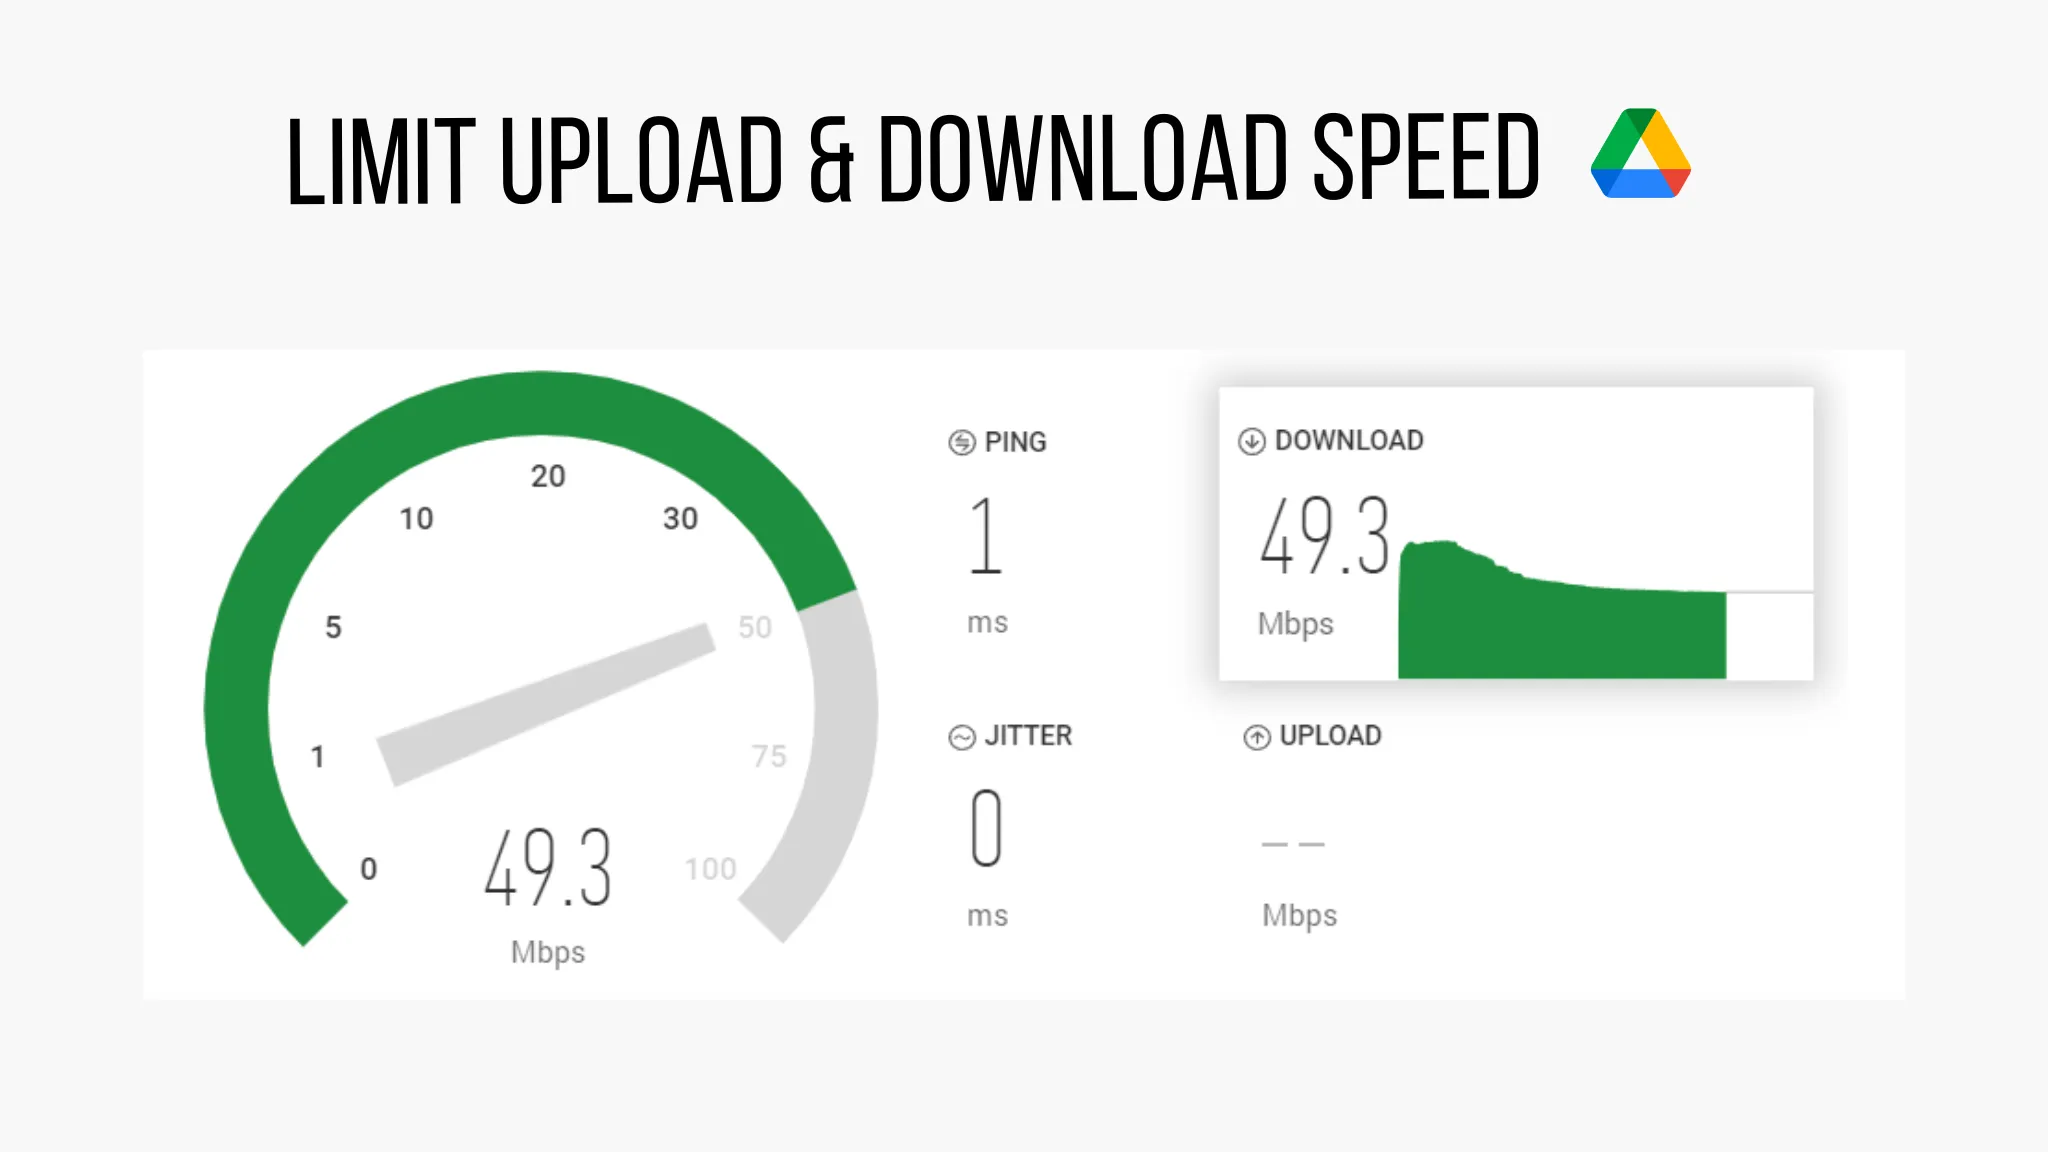 Why limit upload/download speed?